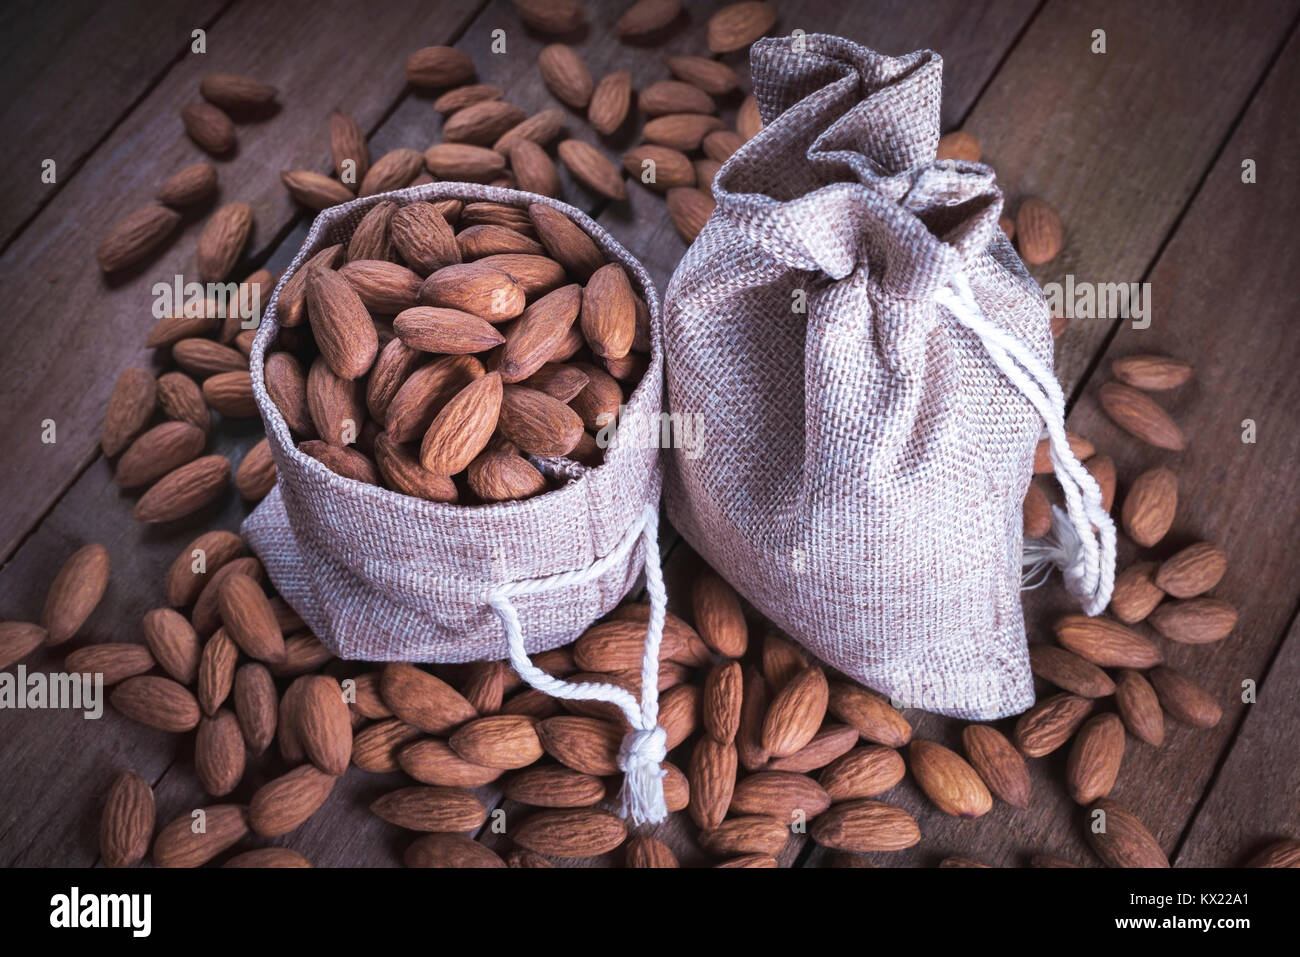 Almonds in hessian sack. Stock Photo